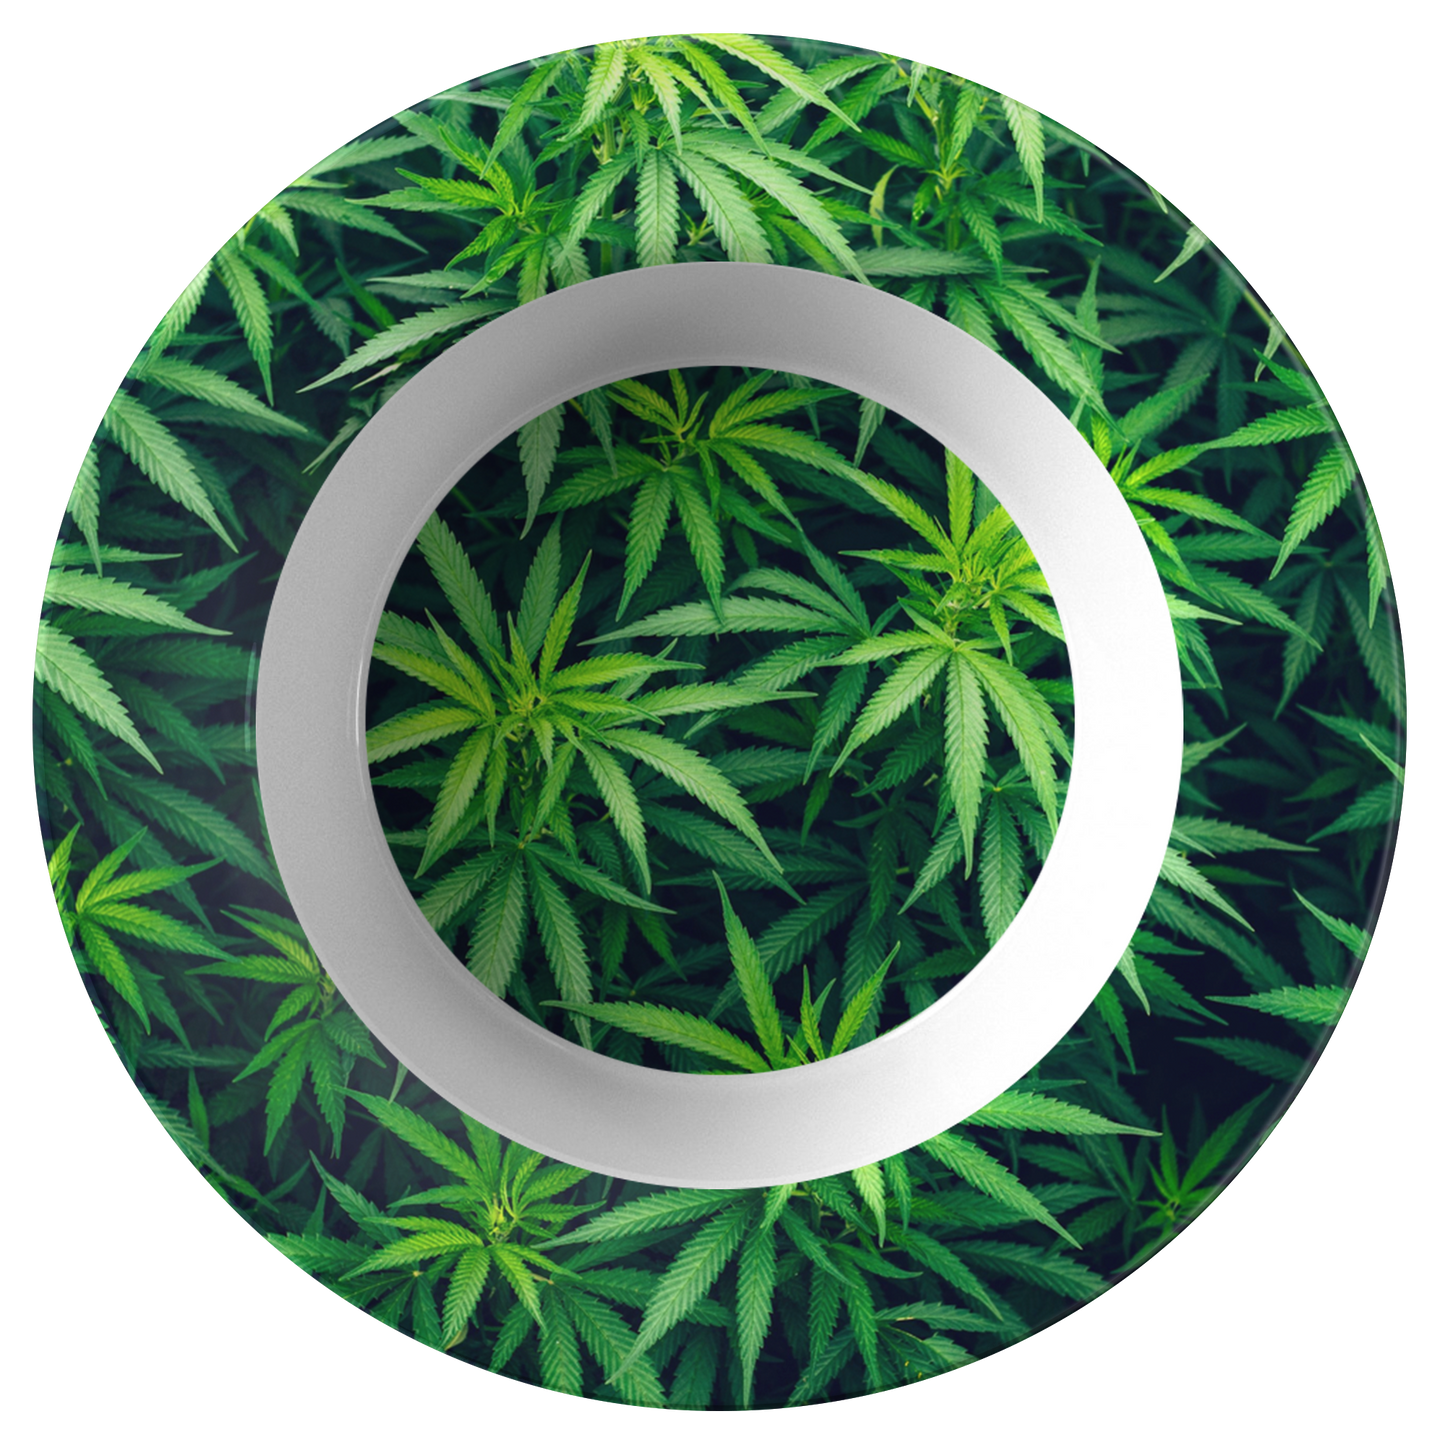 My Cannabis Bowl